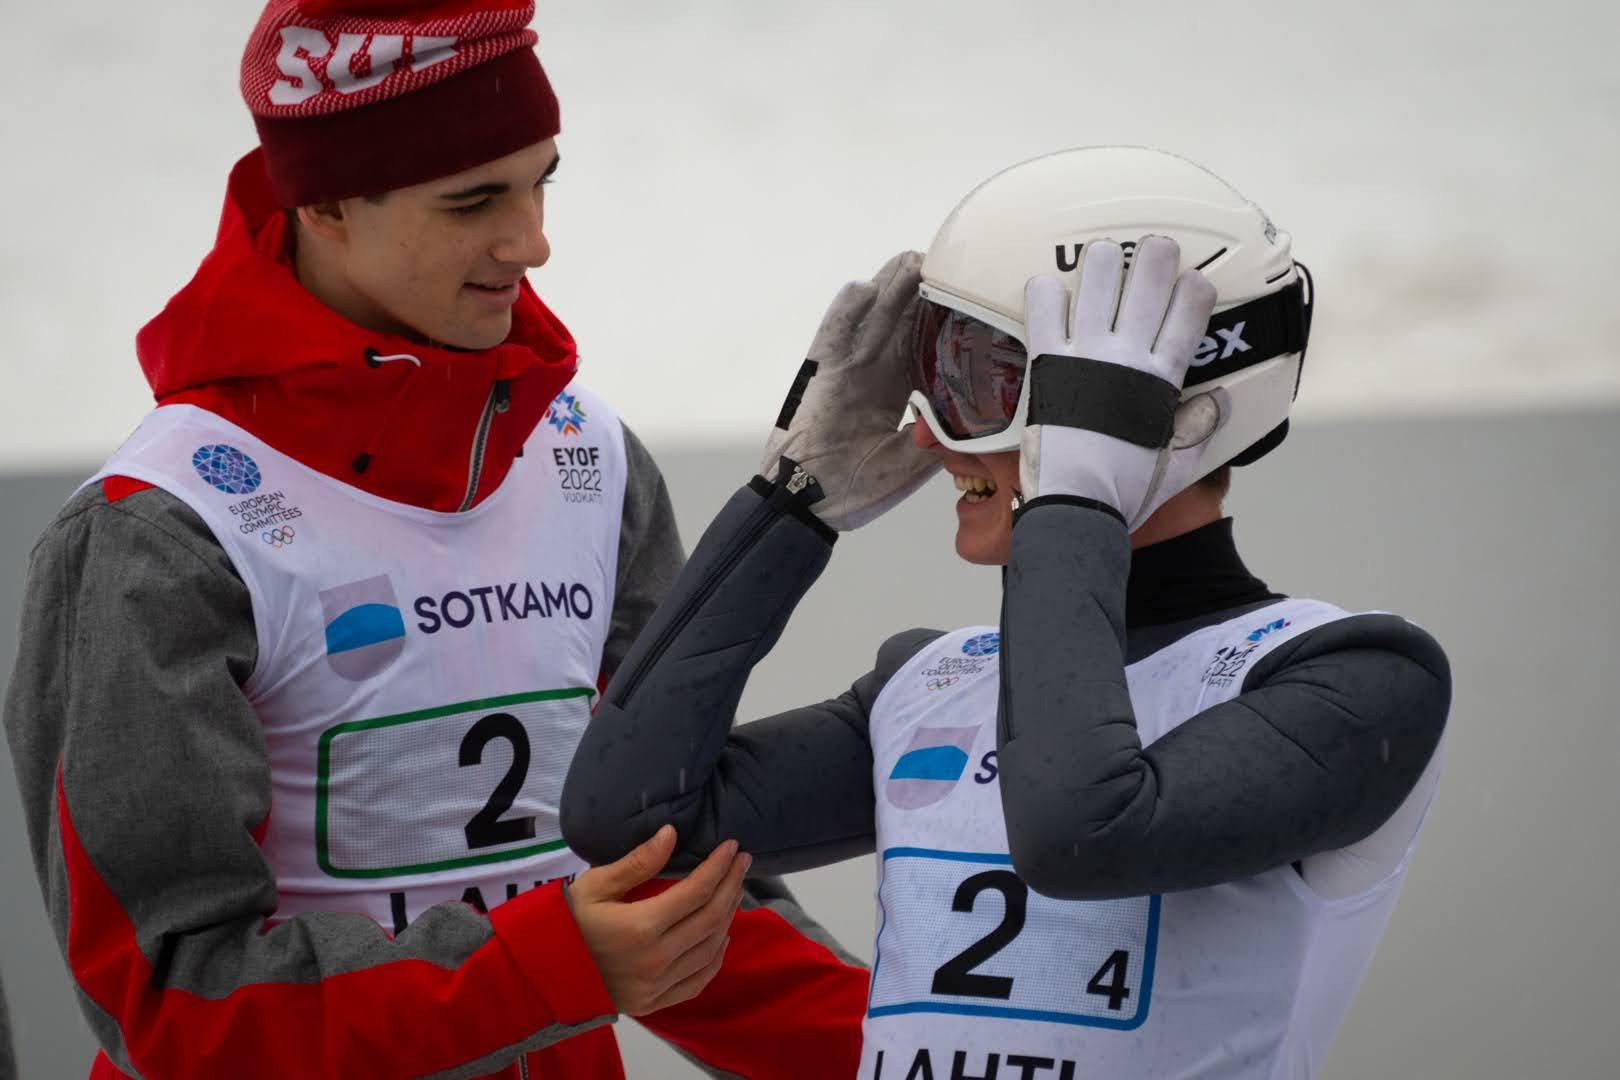 Switzerland placed third in the mixed team ski jumping ©Thomas Parviainen/EYOF 2022 Vuokatti